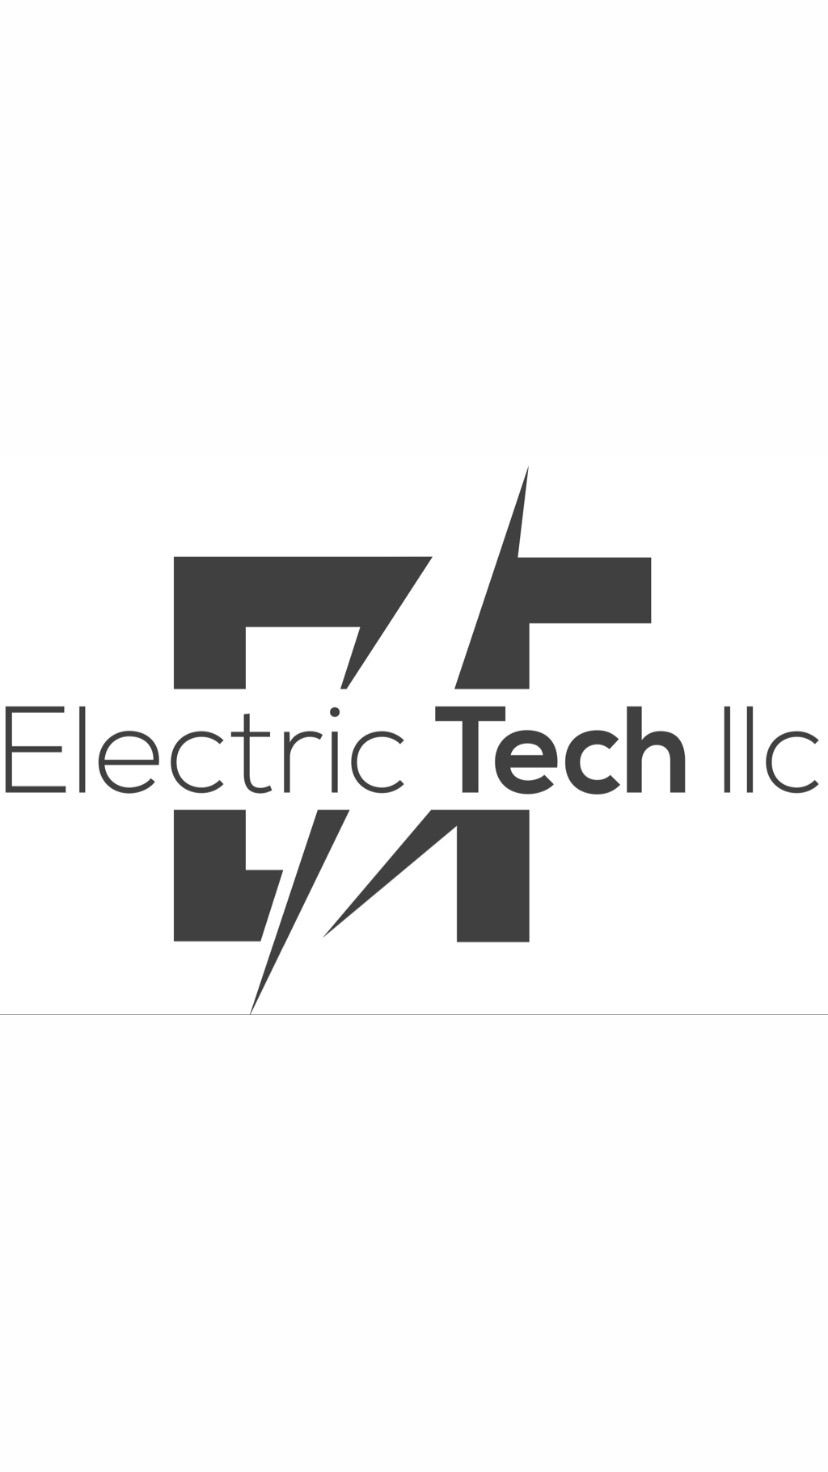 Electric Tech llc